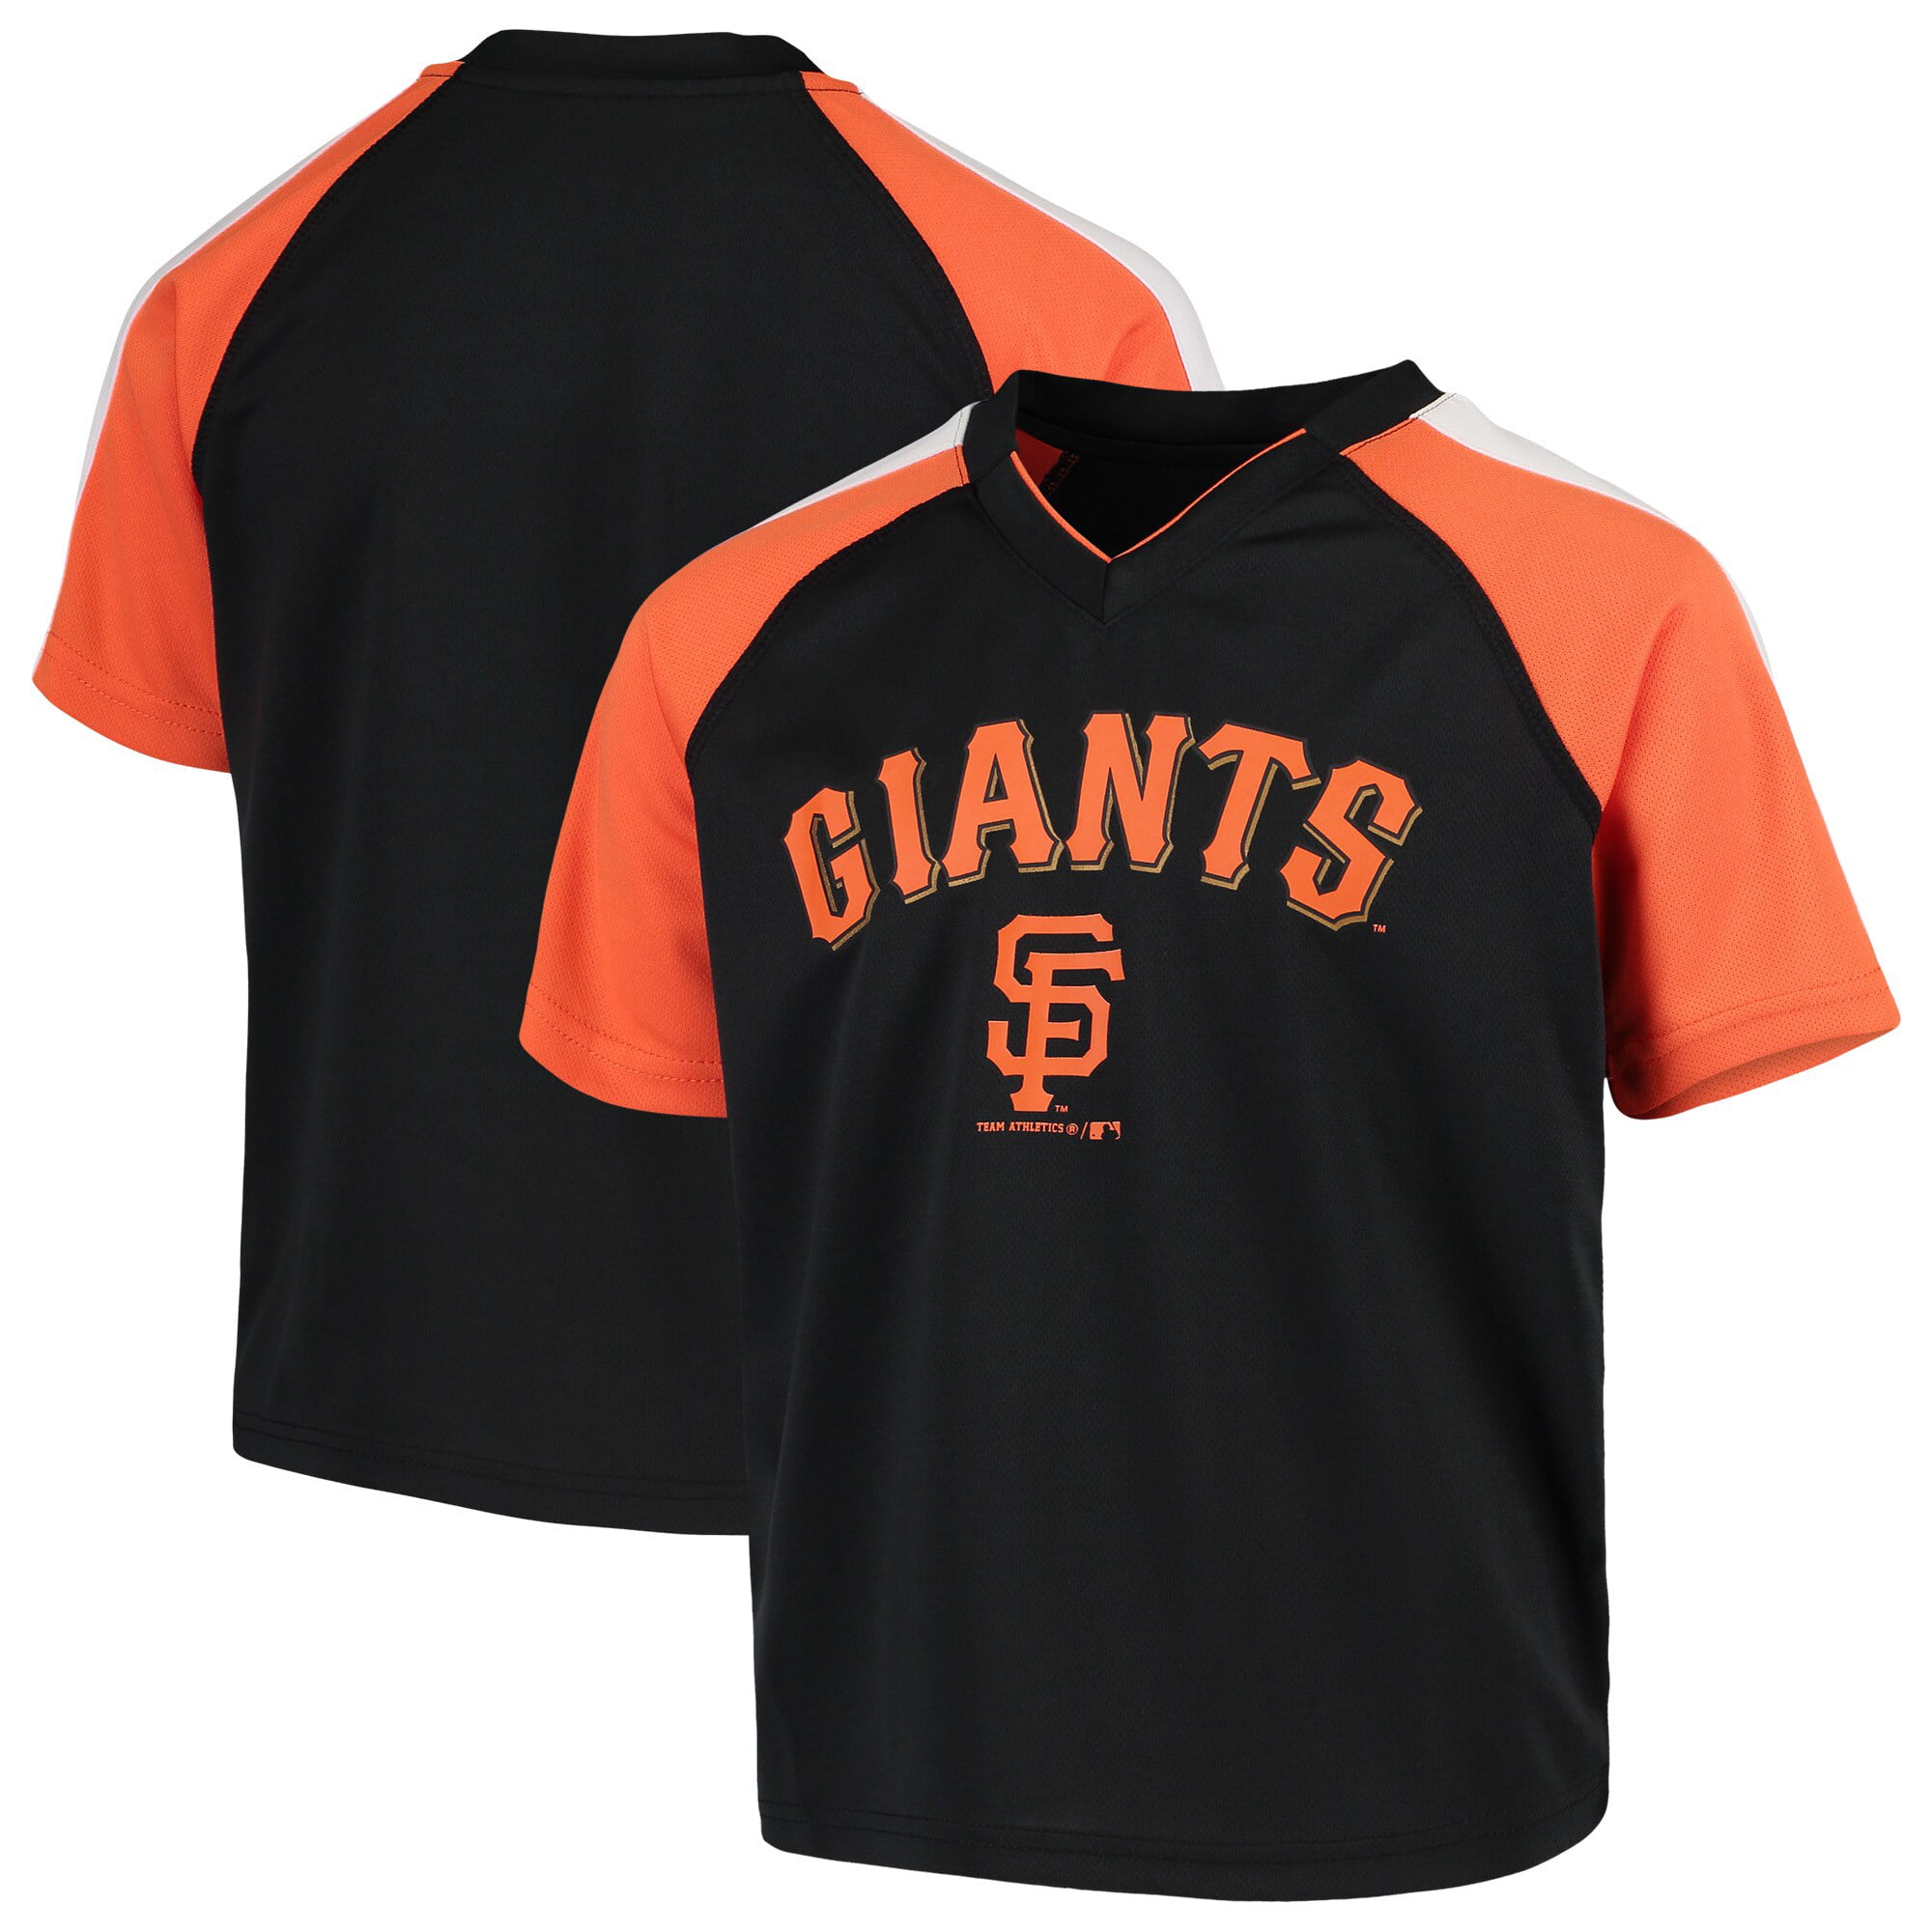 San Francisco Giants Majestic Mesh Polyester Jersey Shirt 